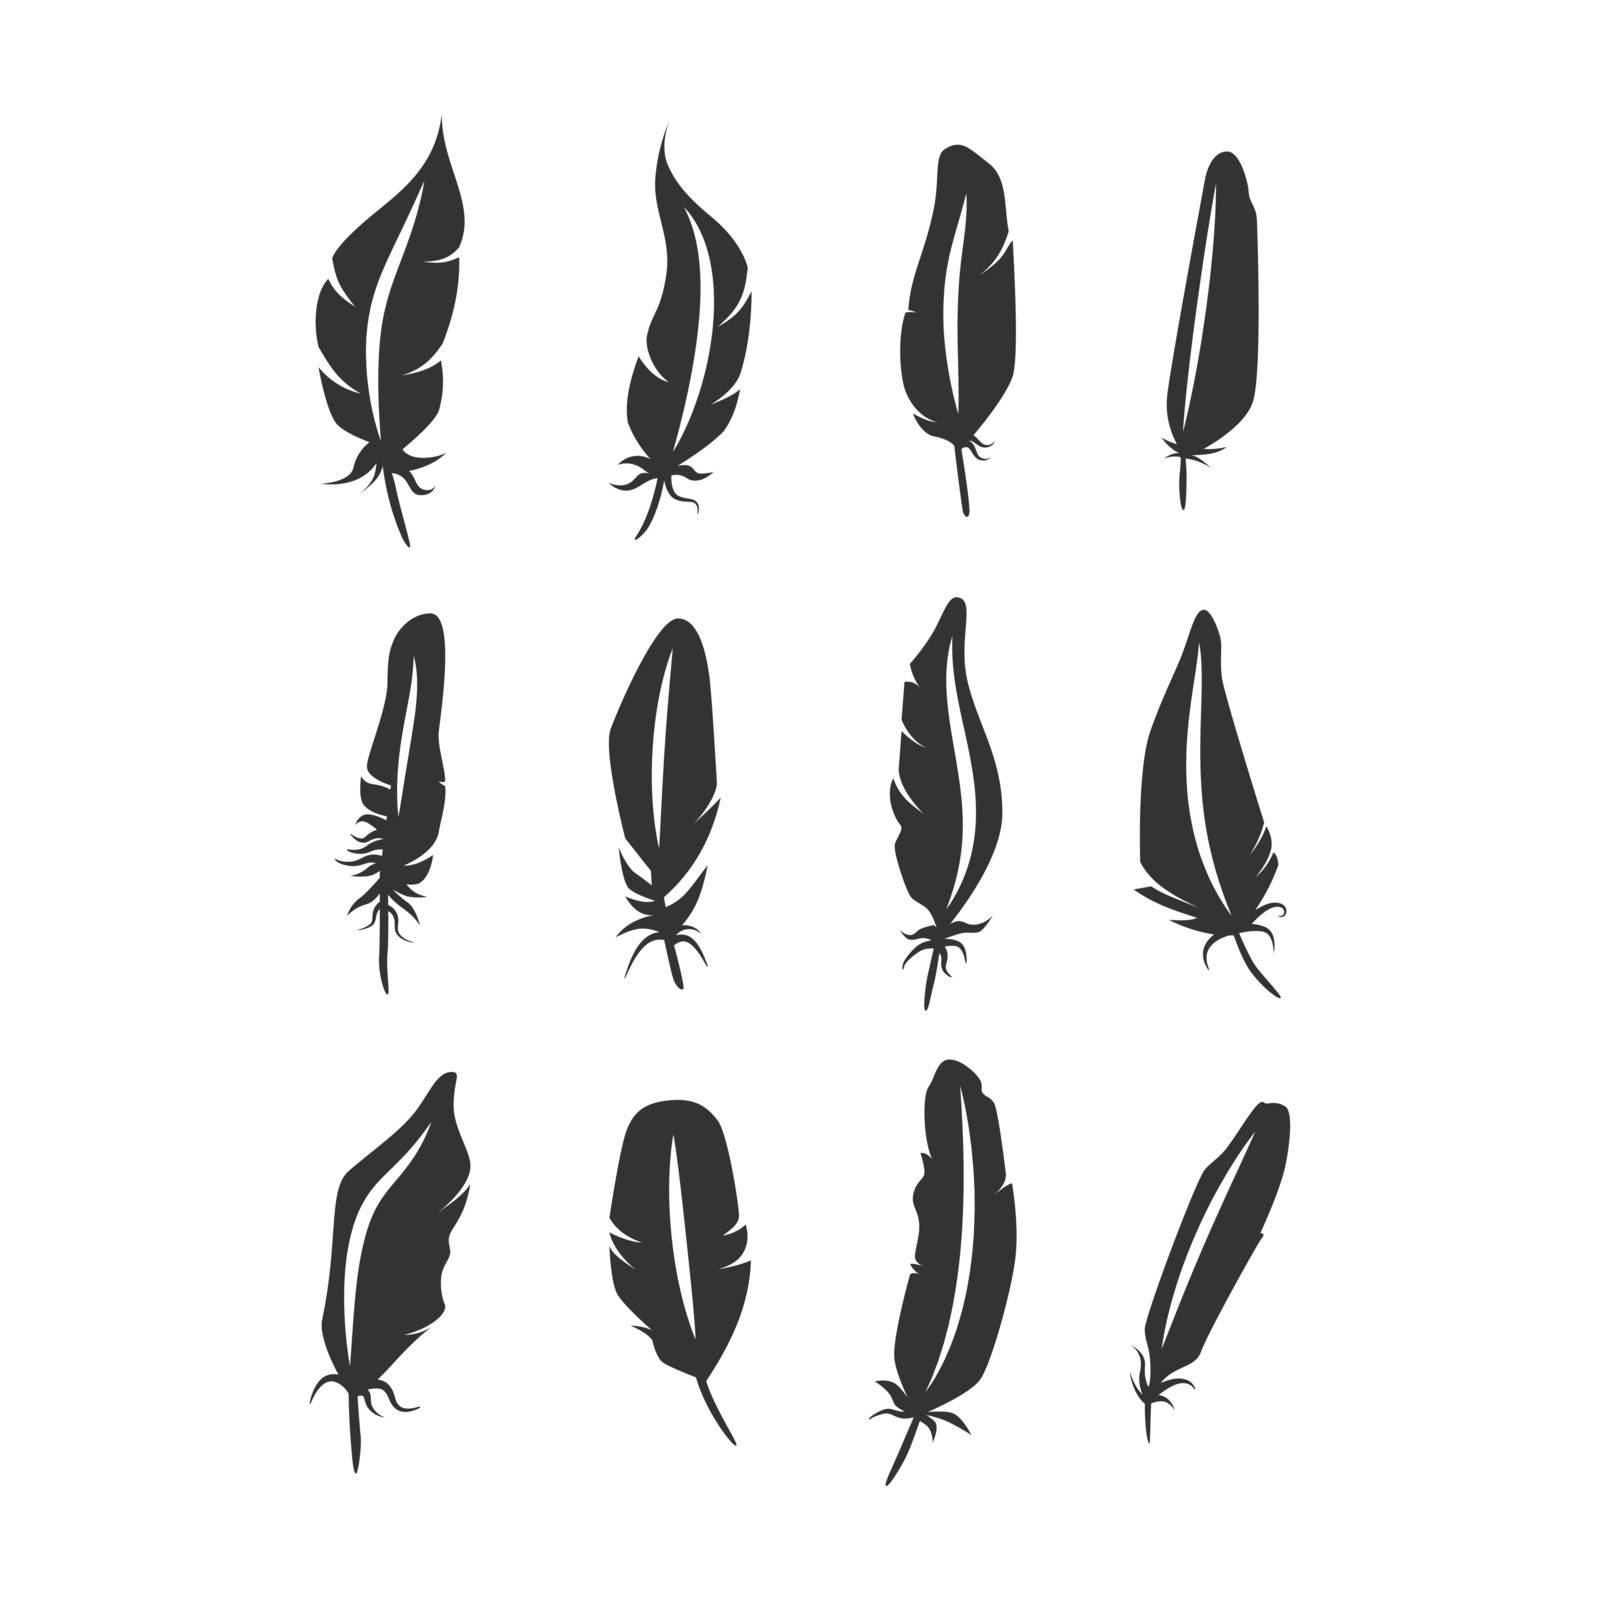 Bird feathers black silhouette icon set by cveivn